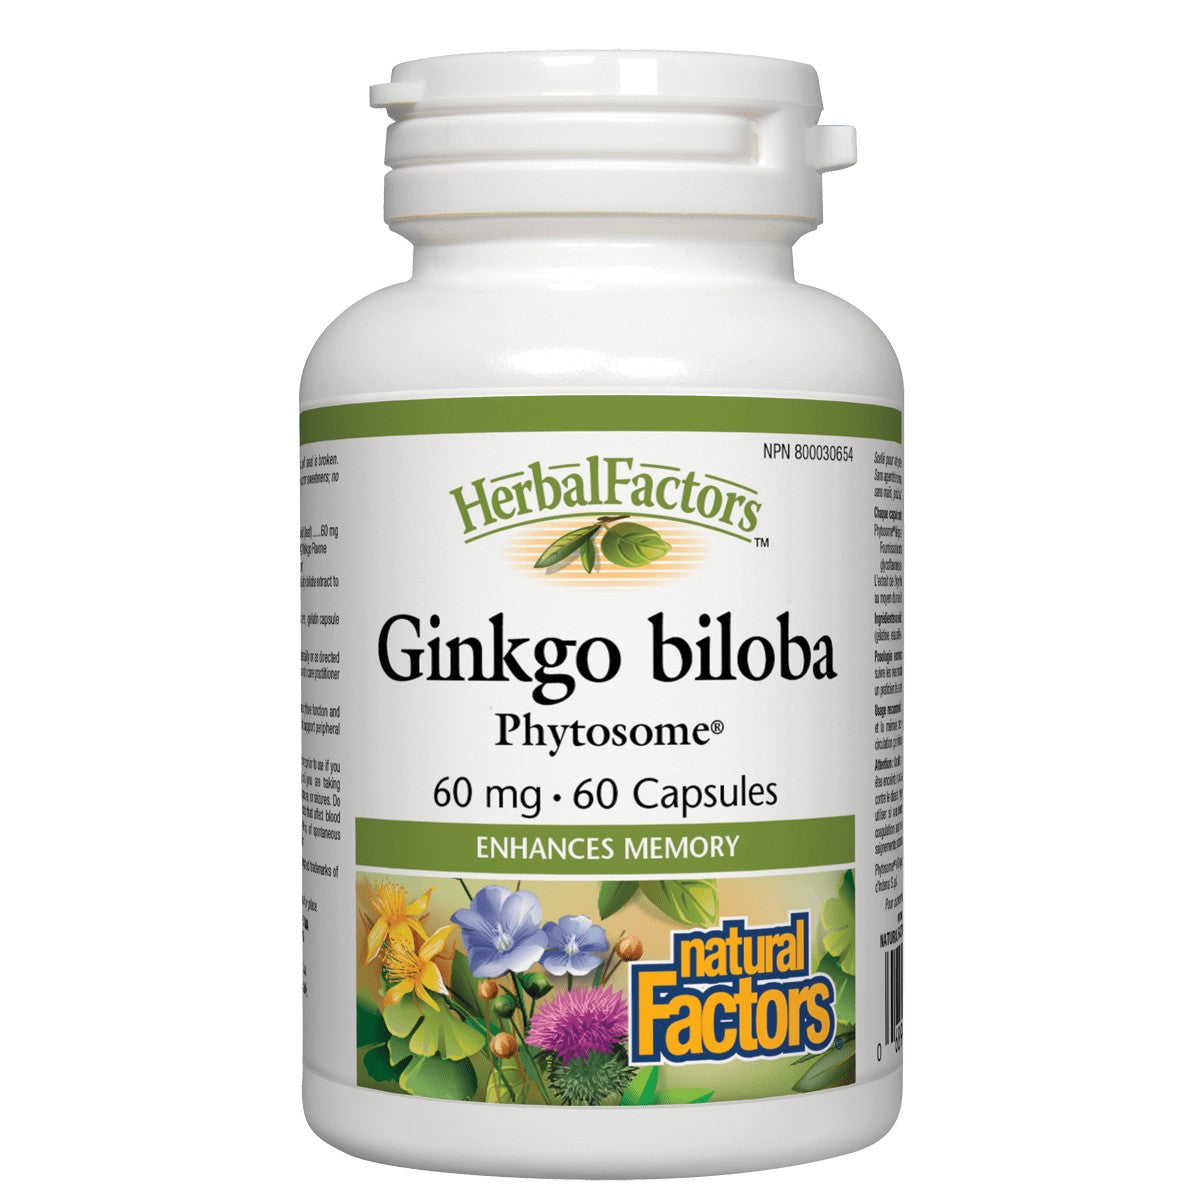 Natural Factors HerbalFactors Ginkgo Biloba Phytosome 60 Mg